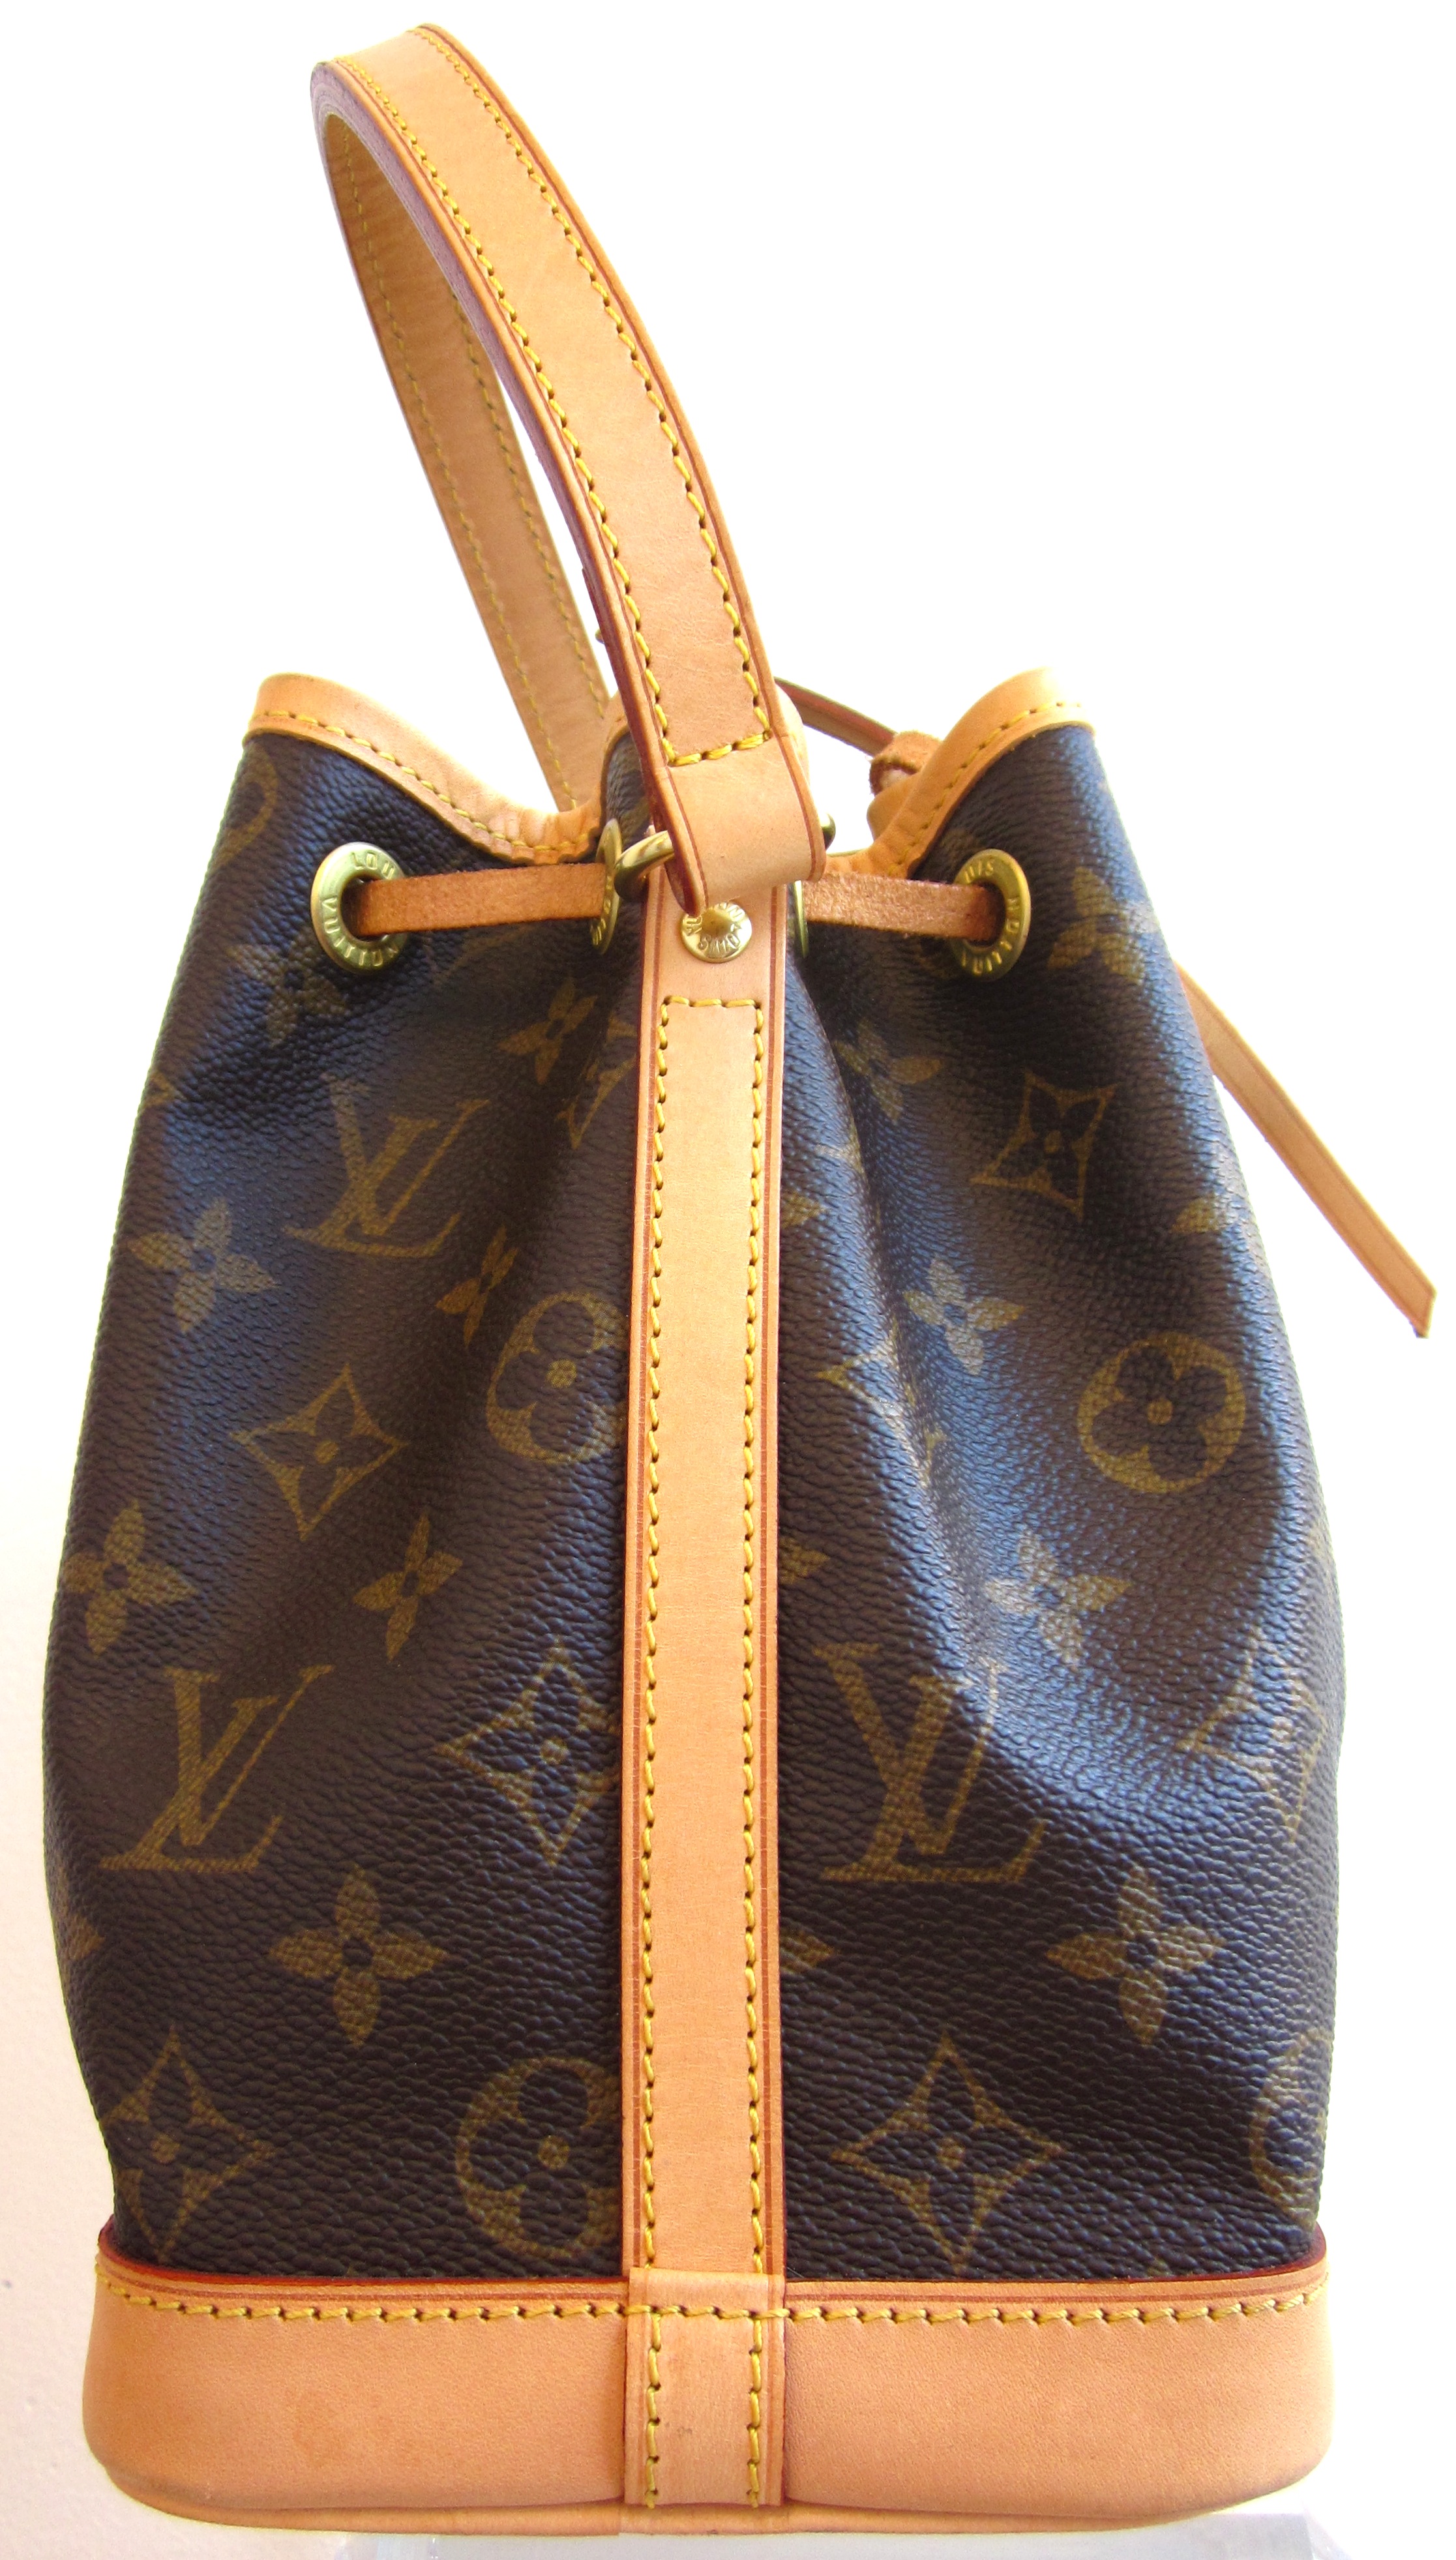 Louis Vuitton Saumur collection, vintage bag (1990s circa